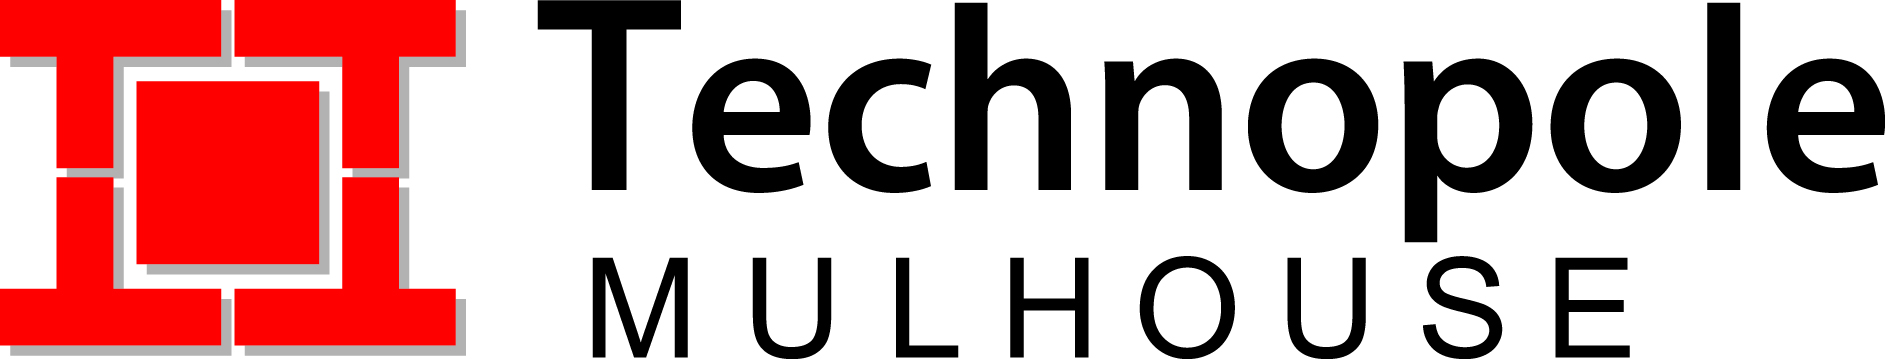 logo-technopole